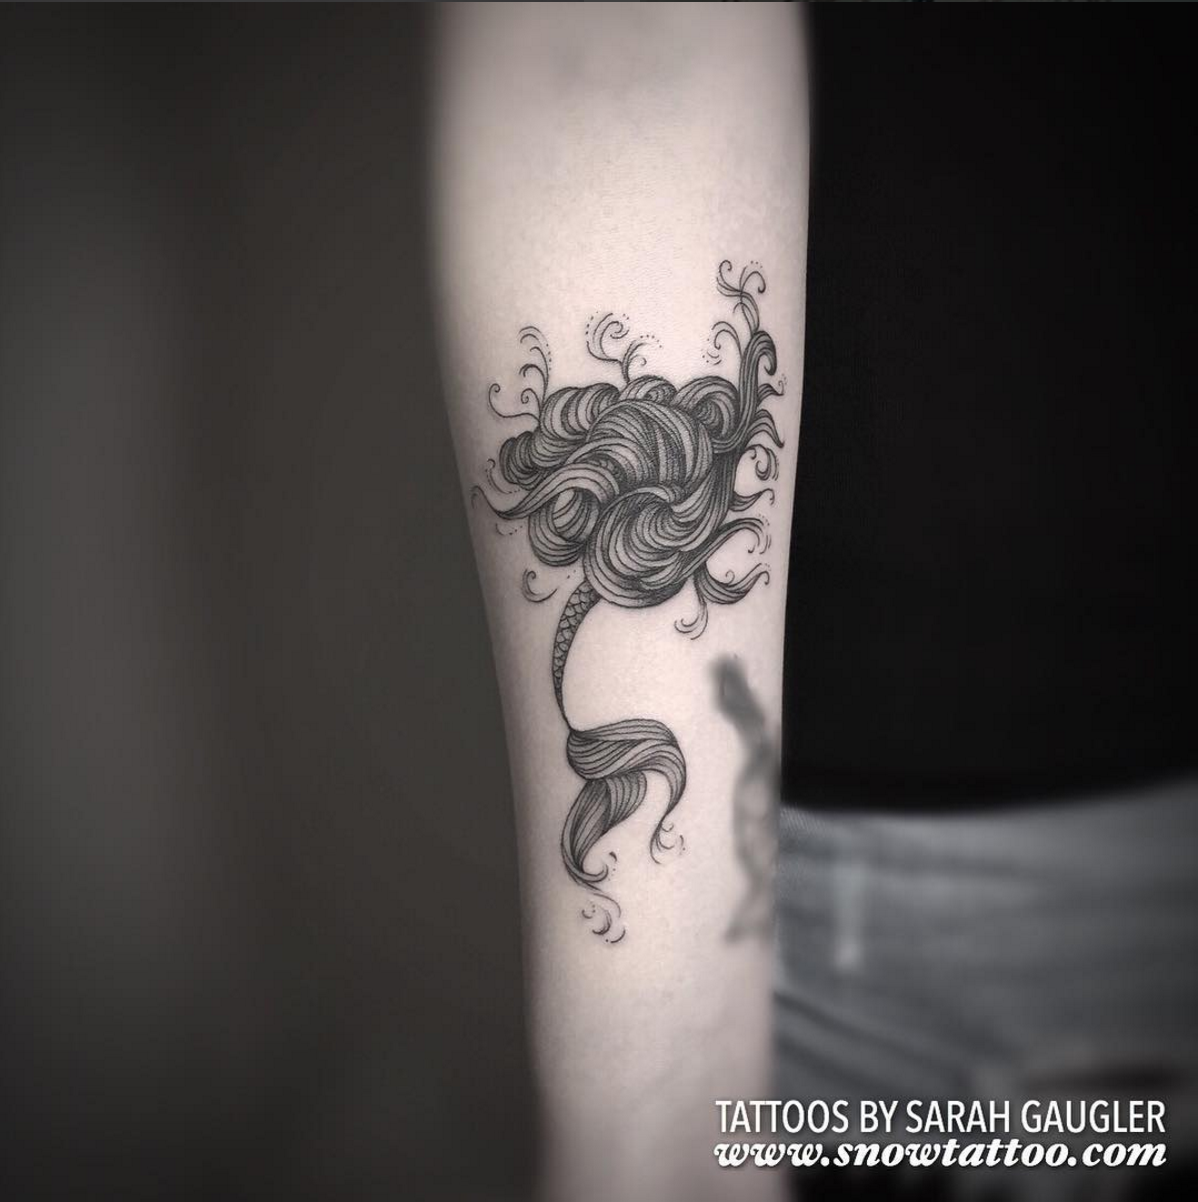 Sarah Gaugler Snow Tattoo Custom Signature Mermaid New York Best Tattoos Best Tattoo Artist NYC Sarahgauglermermaid (1).png